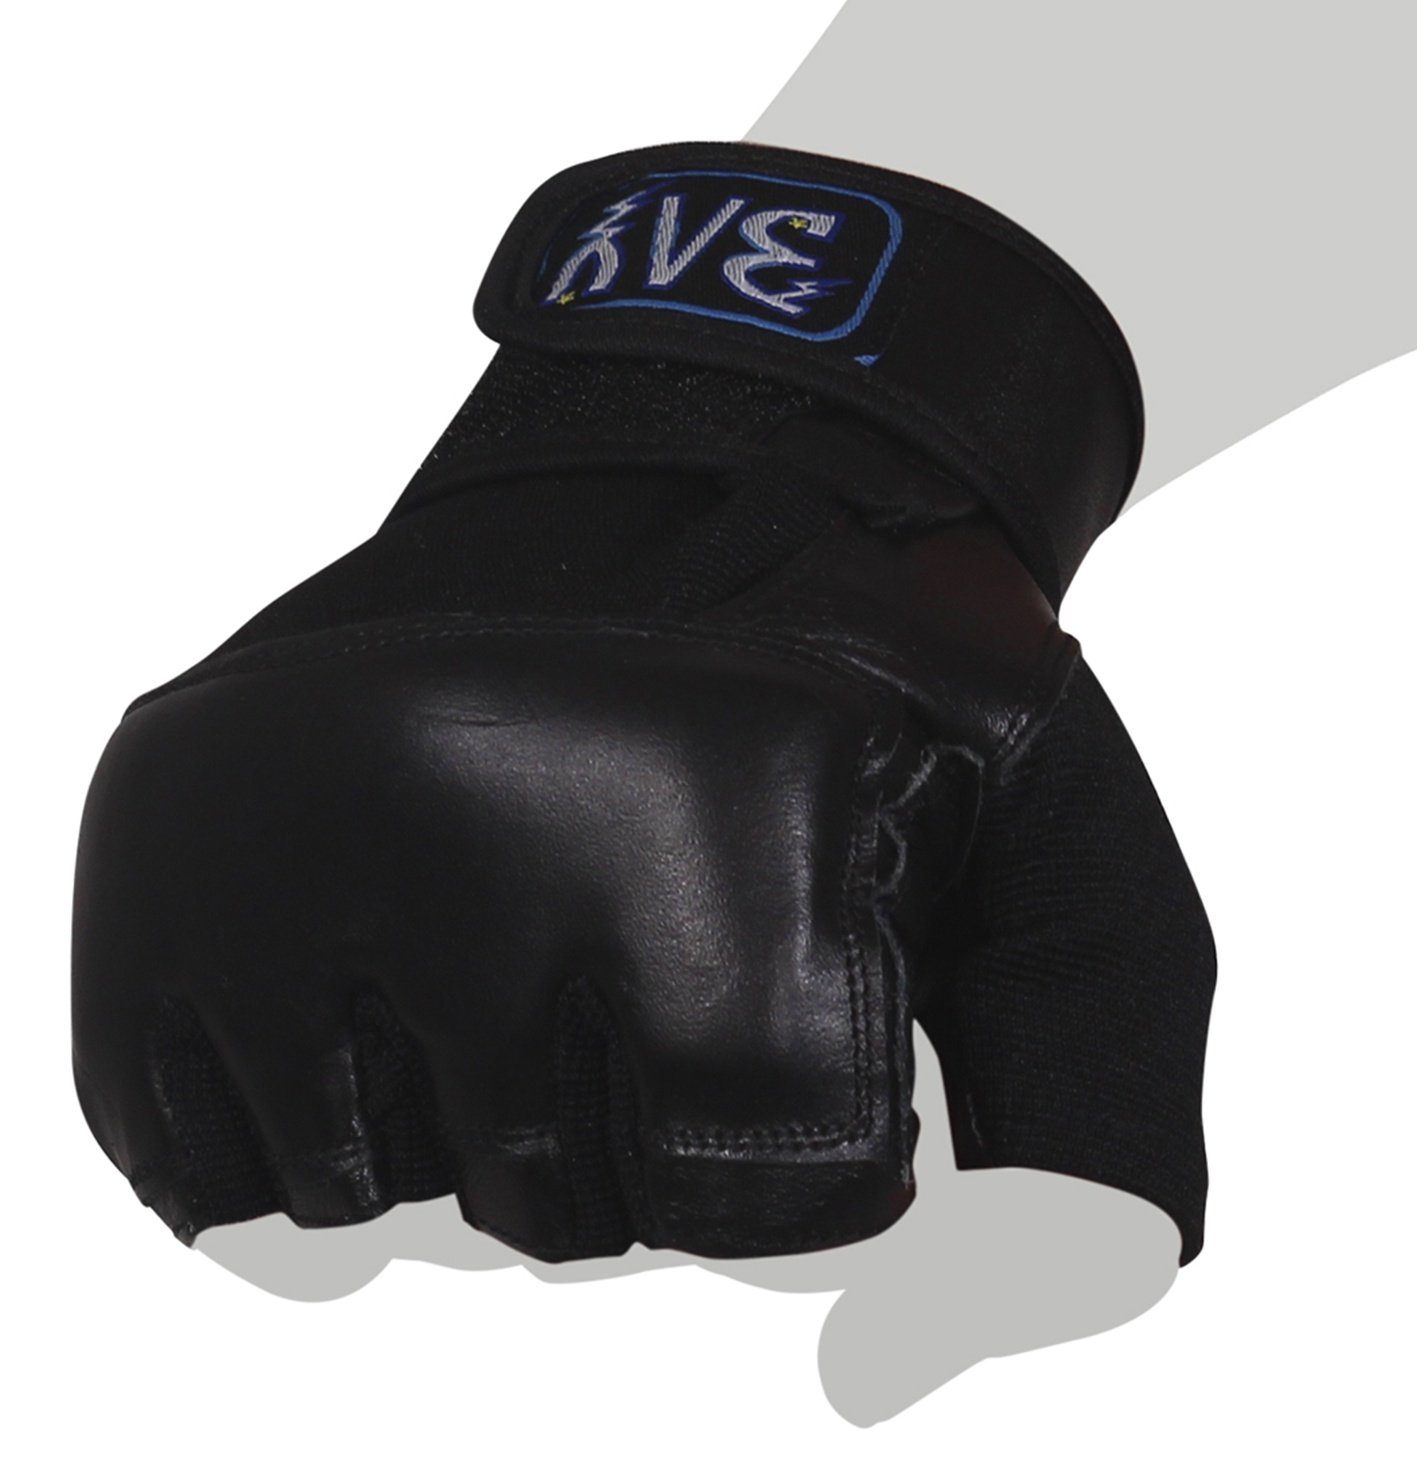 BAY-Sports Sandsackhandschuhe Orbit S schwarz, sehr Sandsack Leder, Boxhandschuhe XL robust, Handschutz - Boxsack